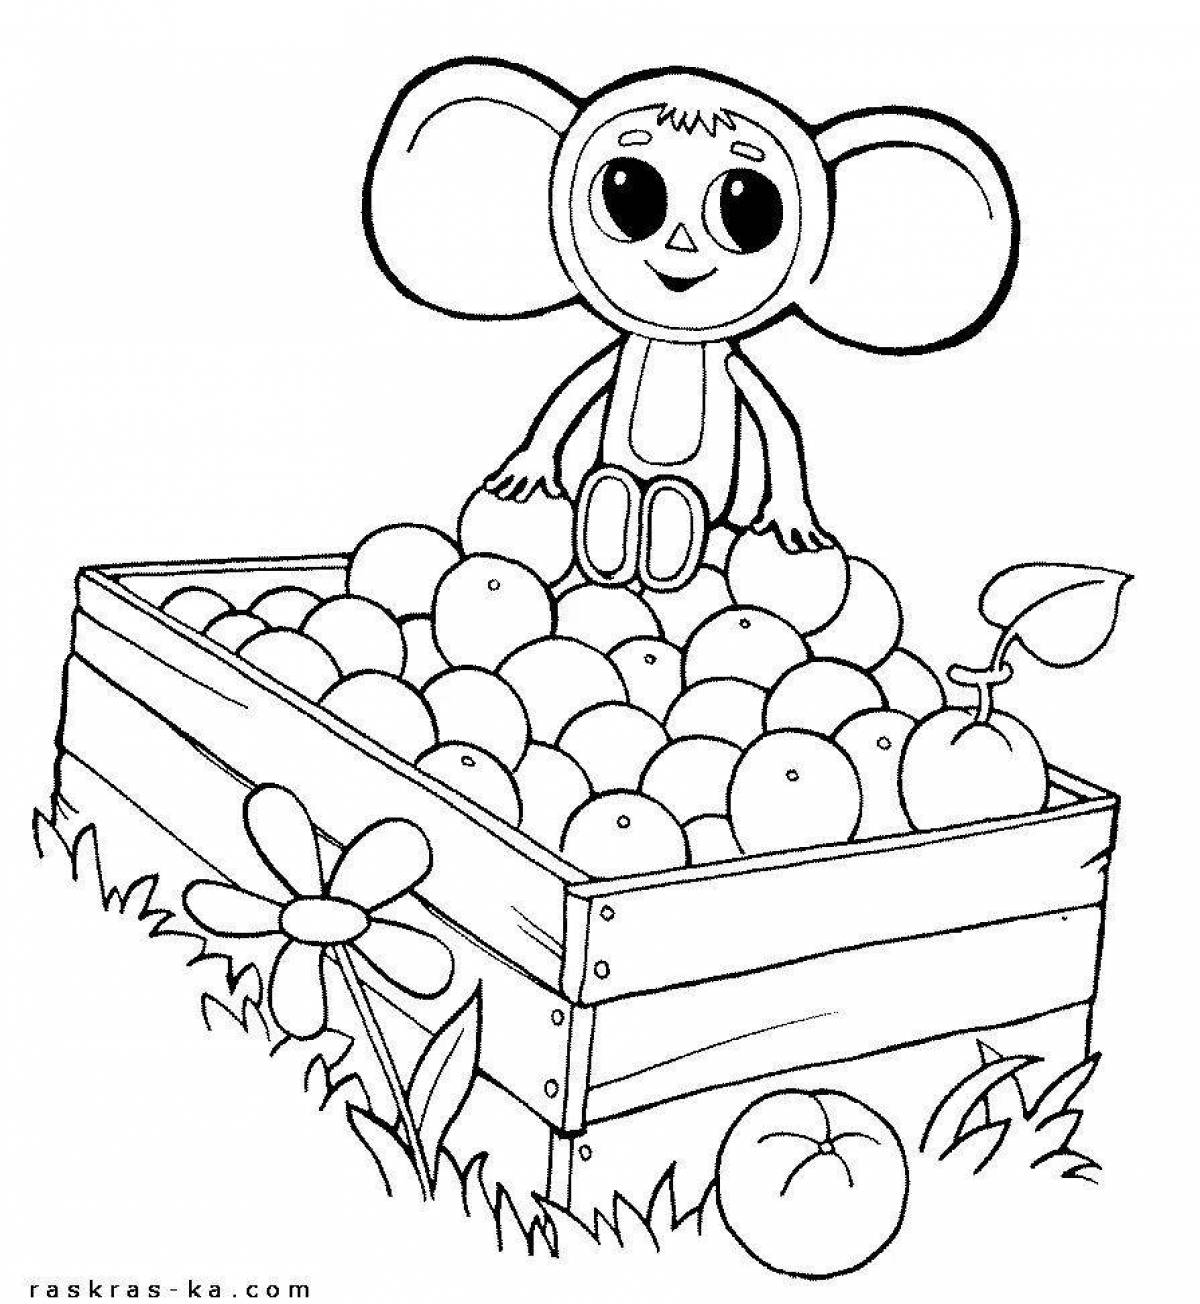 Exciting Cheburashka coloring book for kids